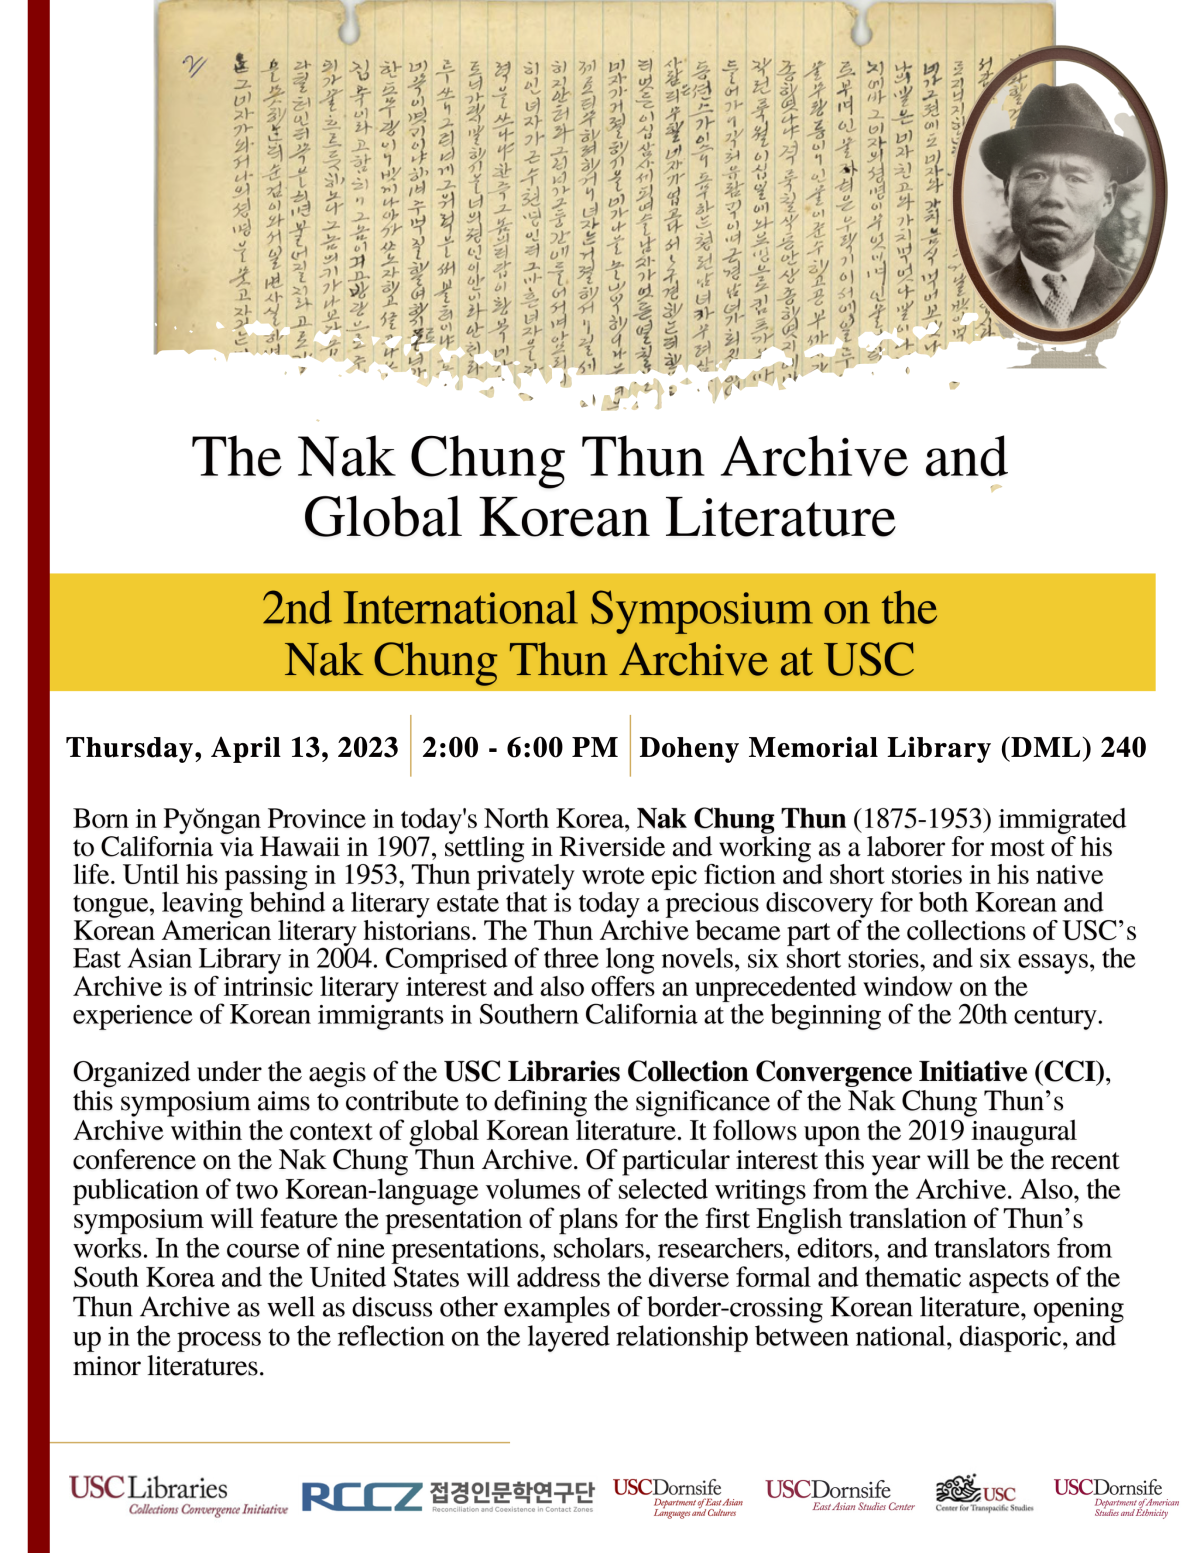 2nd International Symposium on the Nak Chung Thun Archive at USC